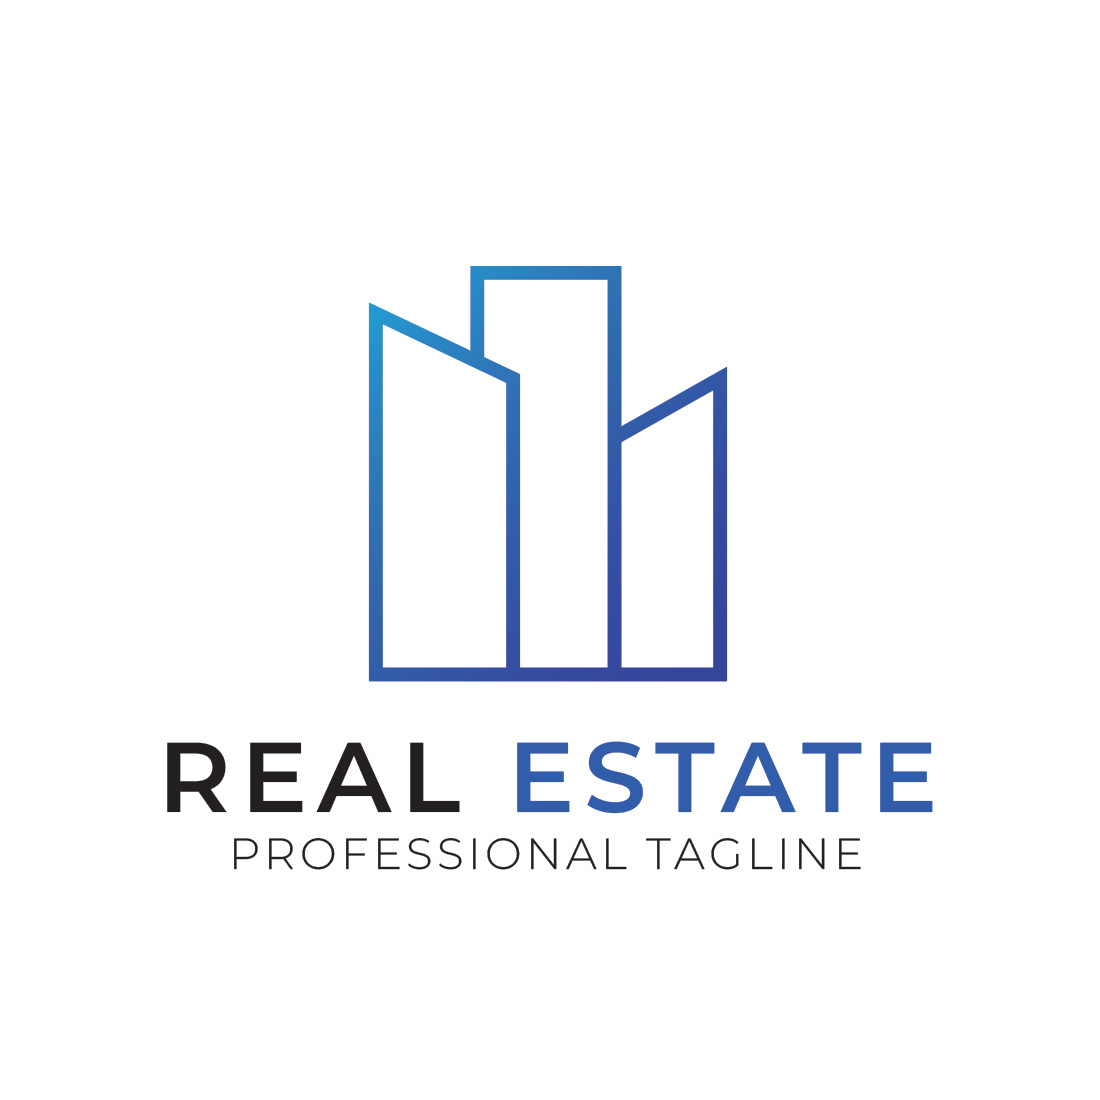 Real Estate Building Logo Bundle preview image.